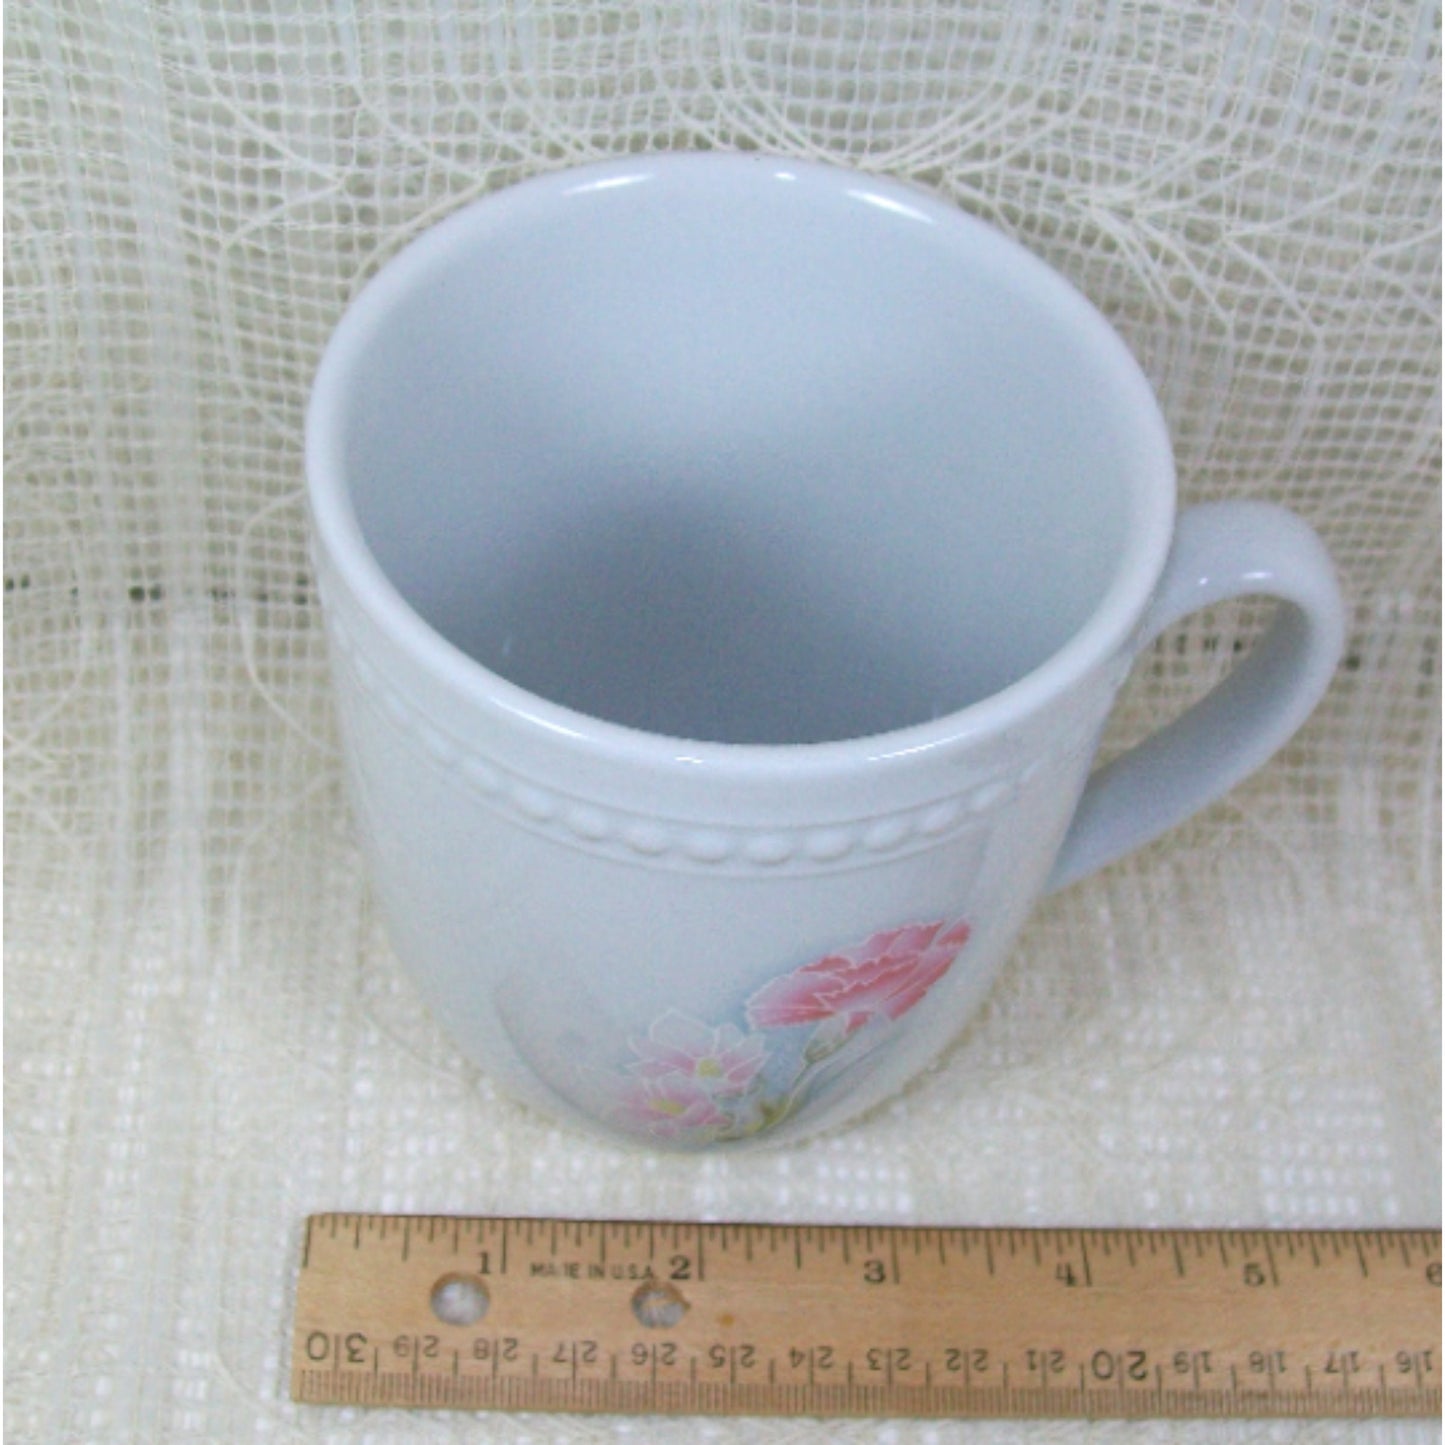 Flower Ceramic Coffee Mug / Coffee Cup With Pink Flower / Tea Mug / Beverage Container / Floral Decor / Inspirational Mug